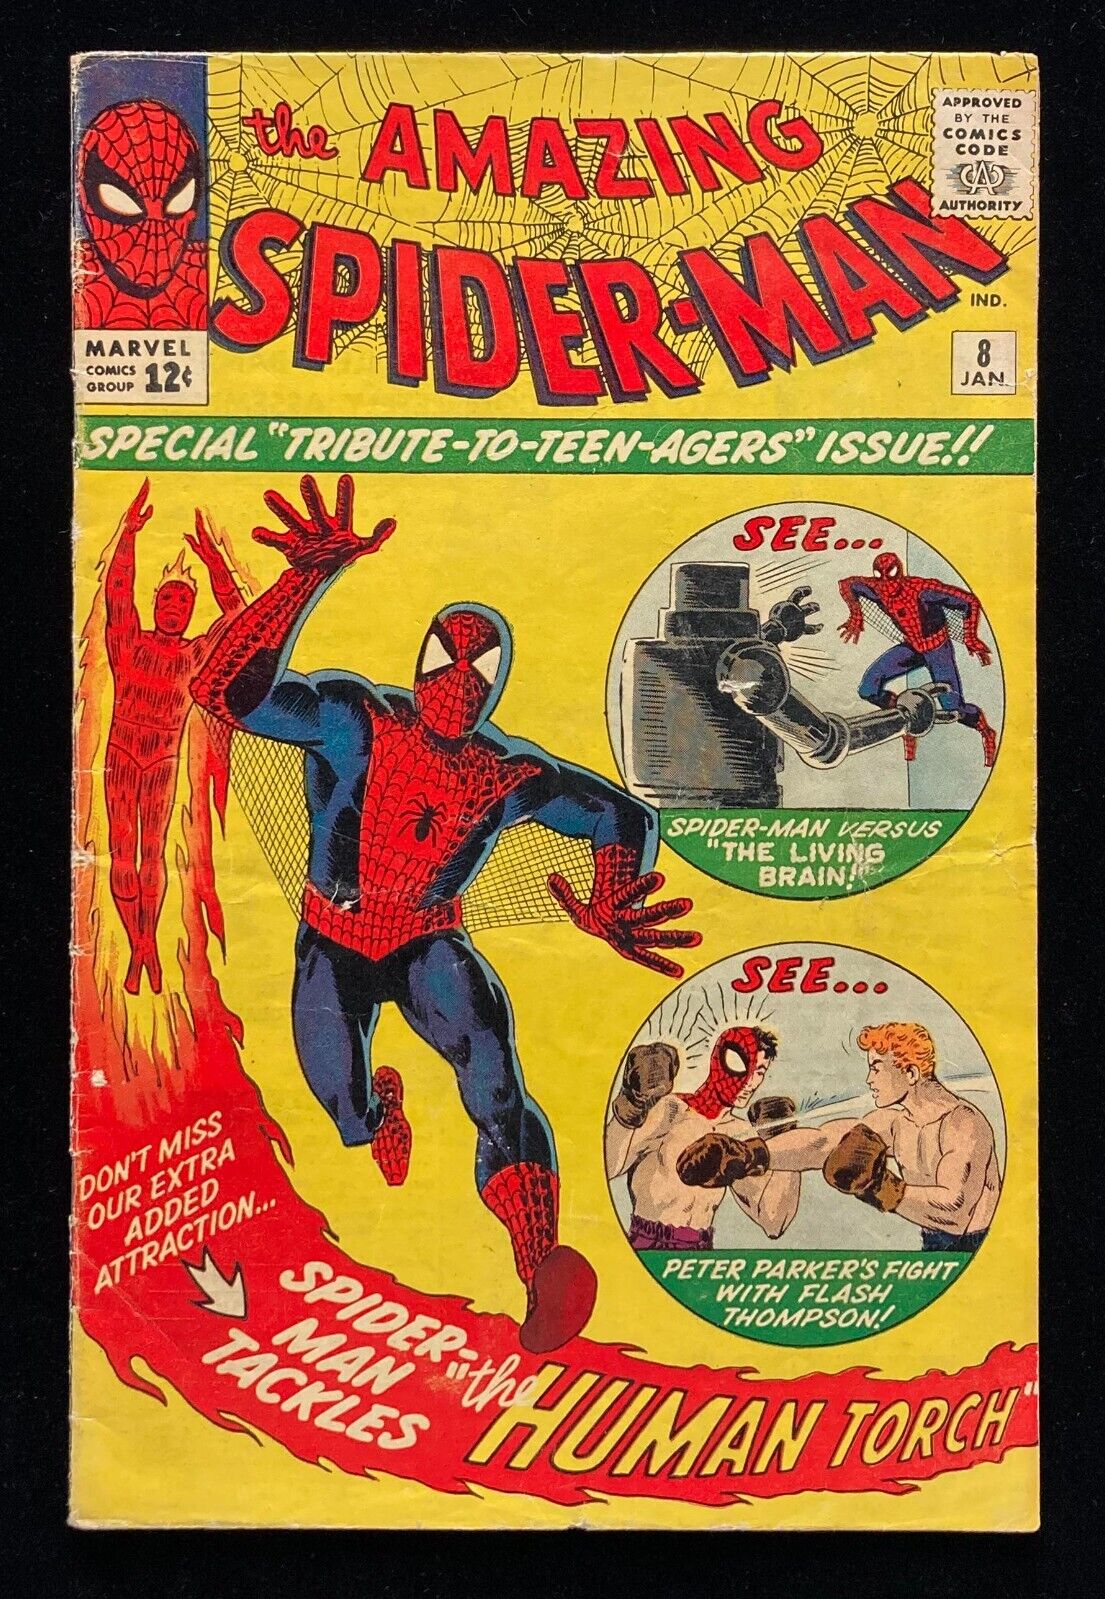 AMAZING SPIDER-MAN #8 (1964) The Living Brain (Marvel)